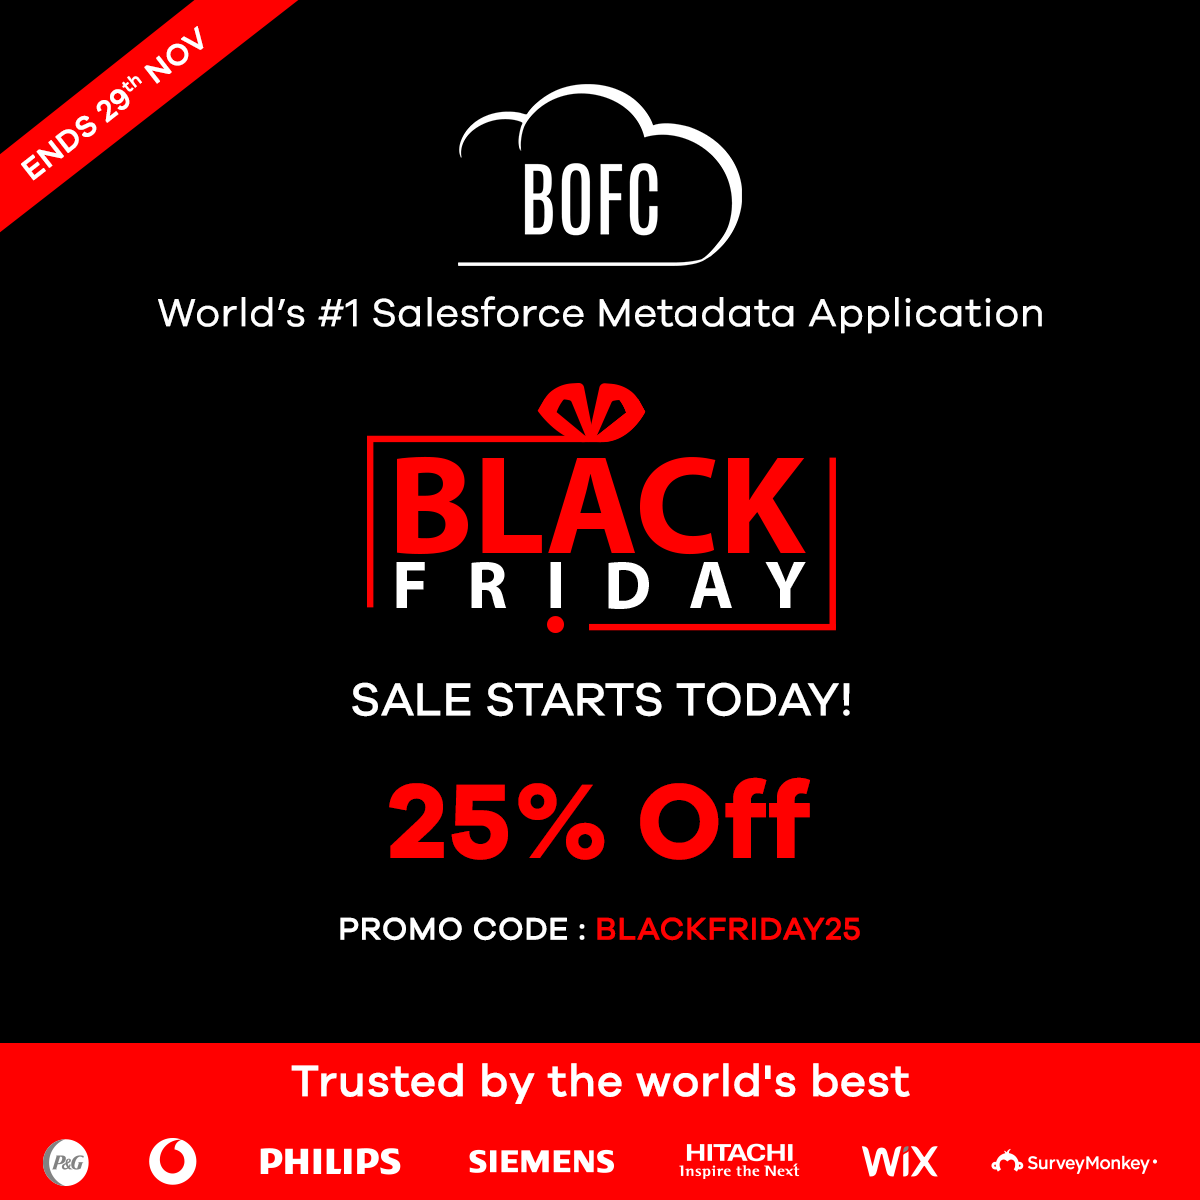 BOFC Black Friday Sale || 25% Off on all Plans, Chautauqua, New York, United States